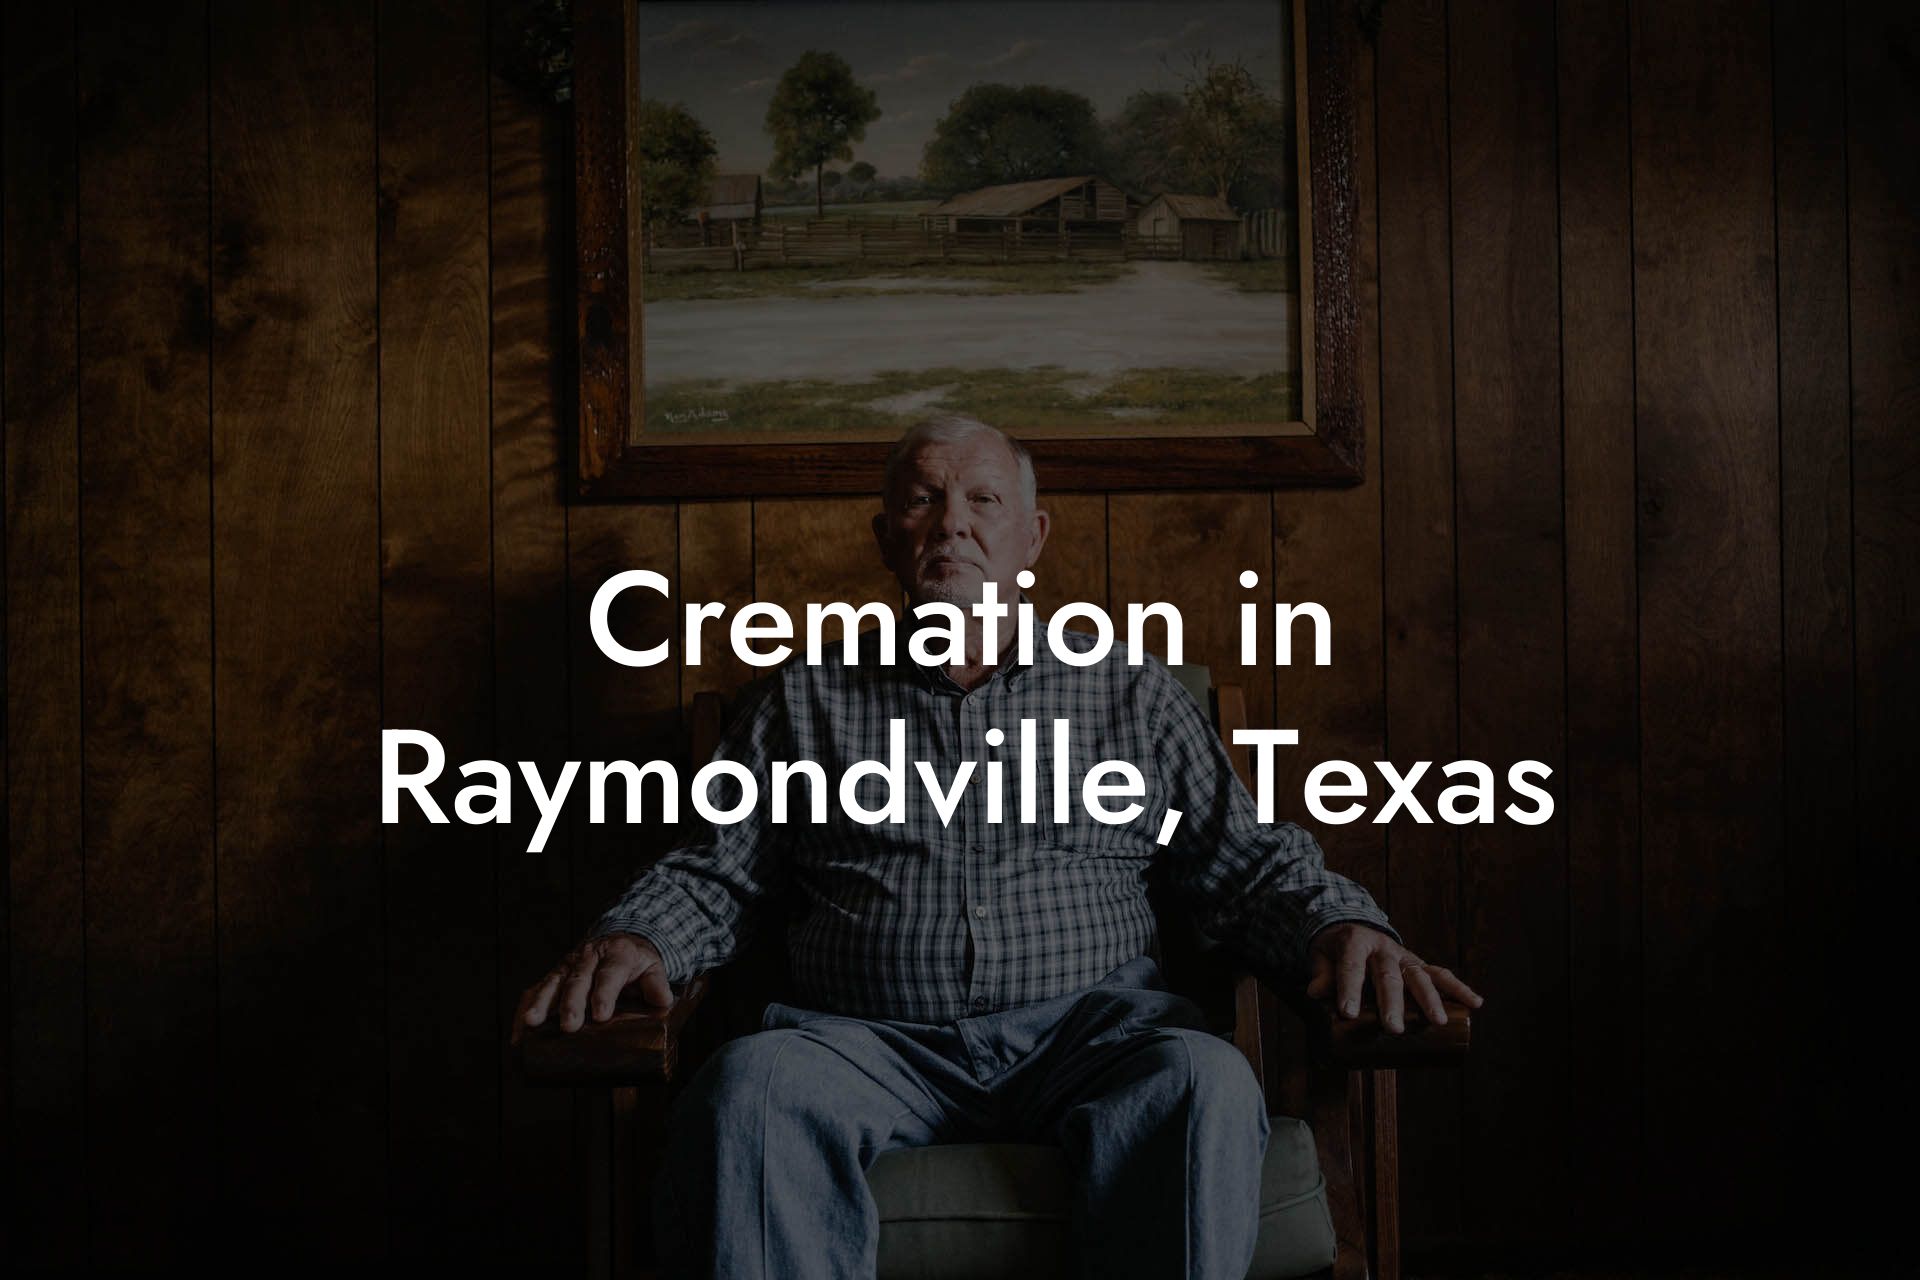 Cremation in Raymondville, Texas